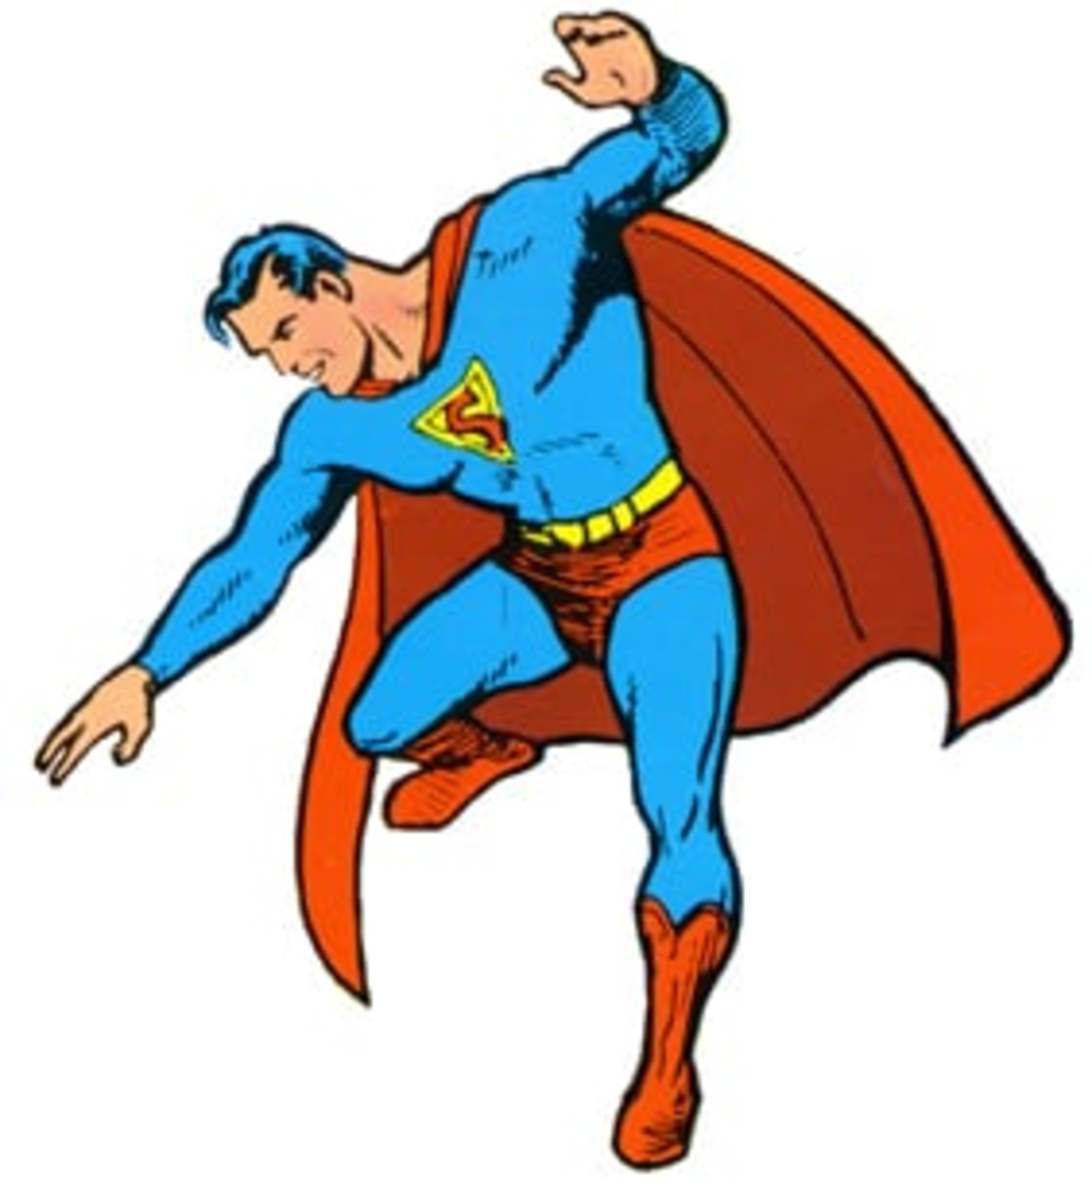 superman 1970